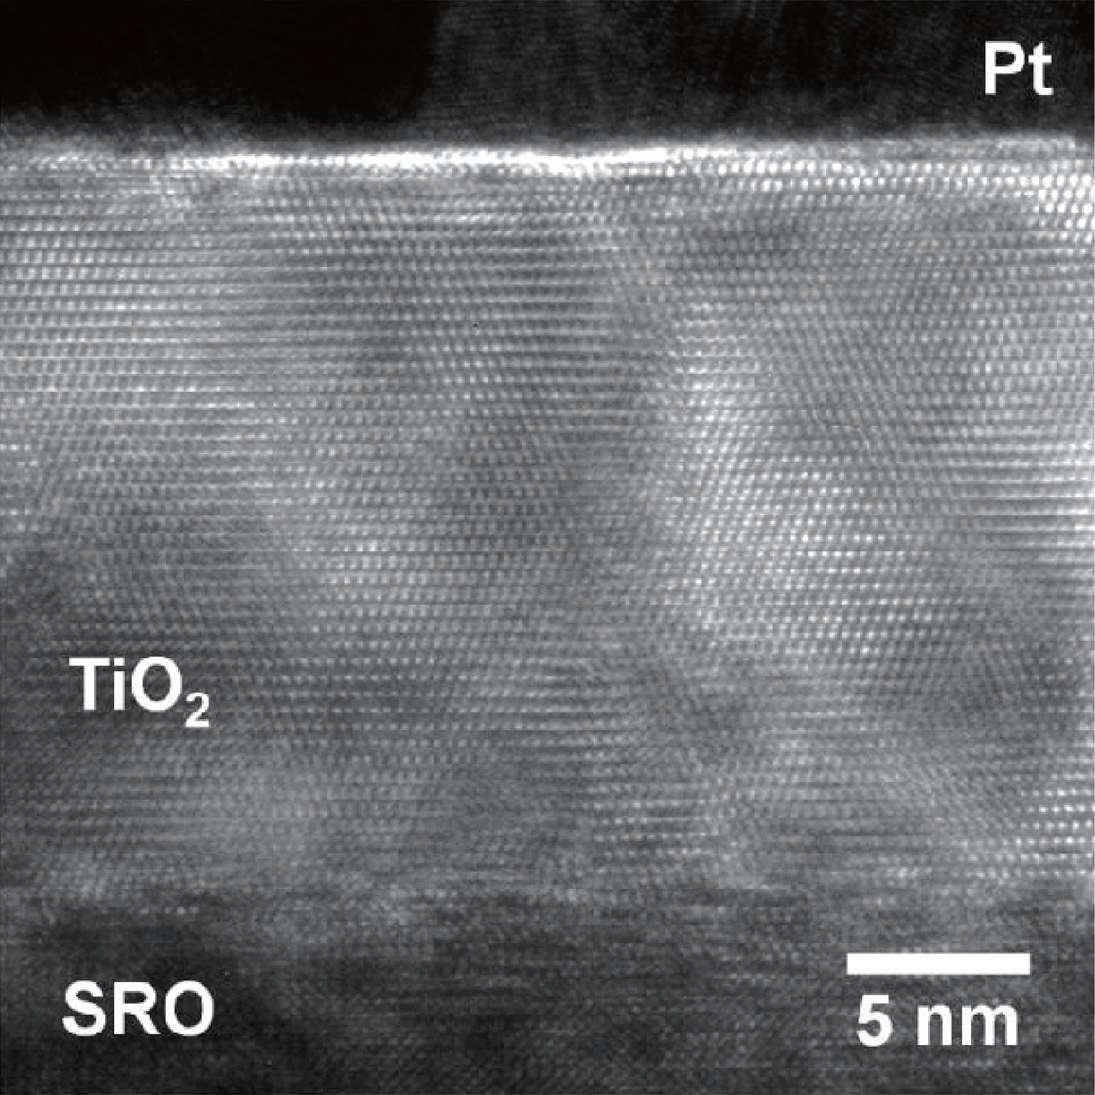 20nm 두께로 증착 된 Pt/TiO2/SRO 의 전자투과현미경 (TEM) 이미지